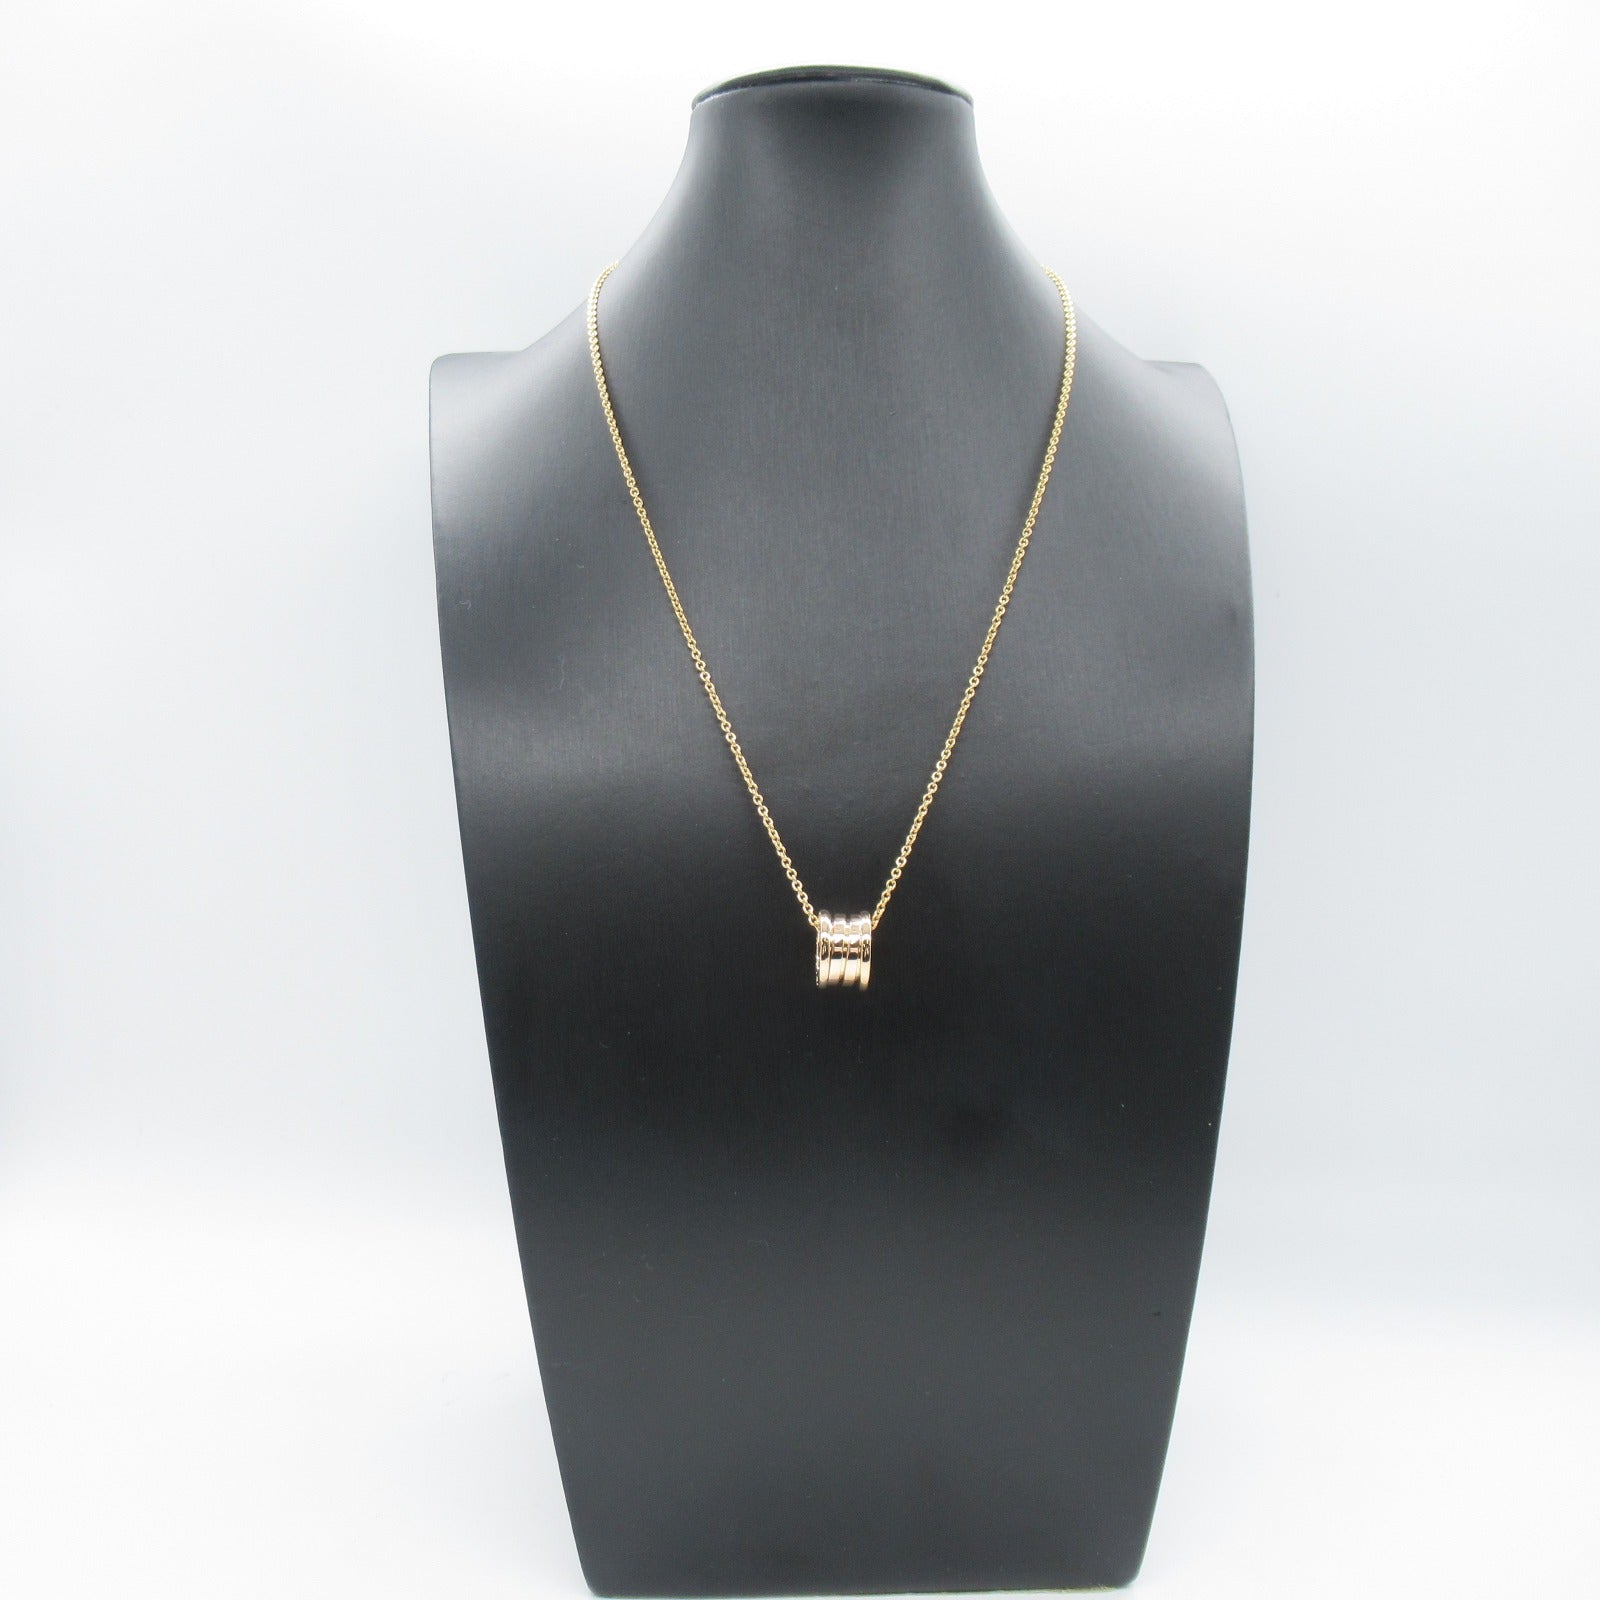 Bulgari BVLGARI B-zero1 Beezel one necklace necklace jewelry K18PG (pink g)   Gold